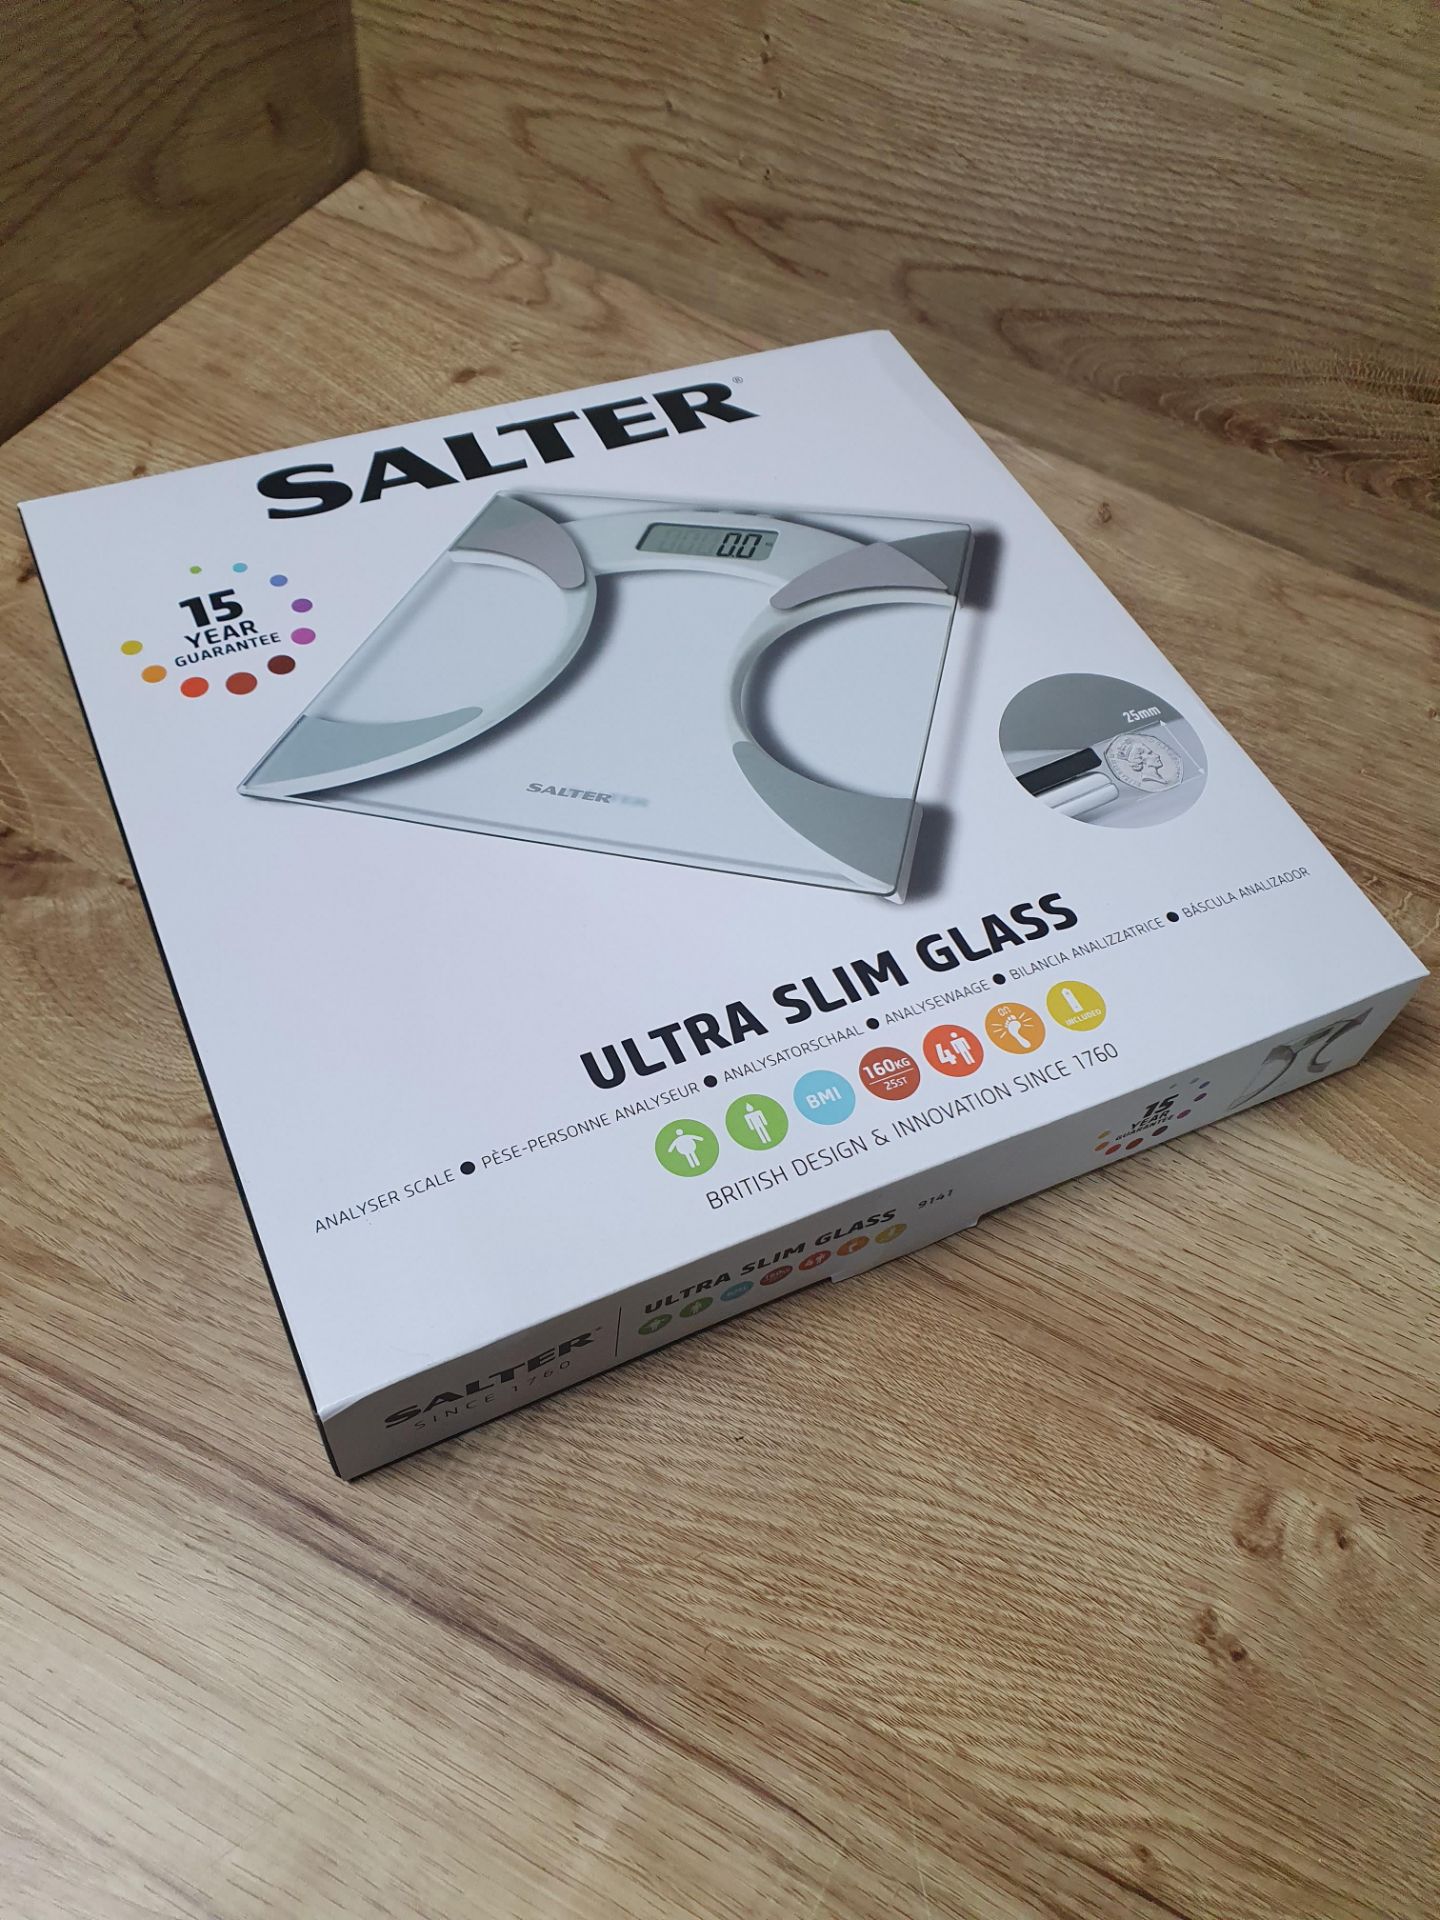 * Salter ultra slim glasss bathroom scales RRP £20